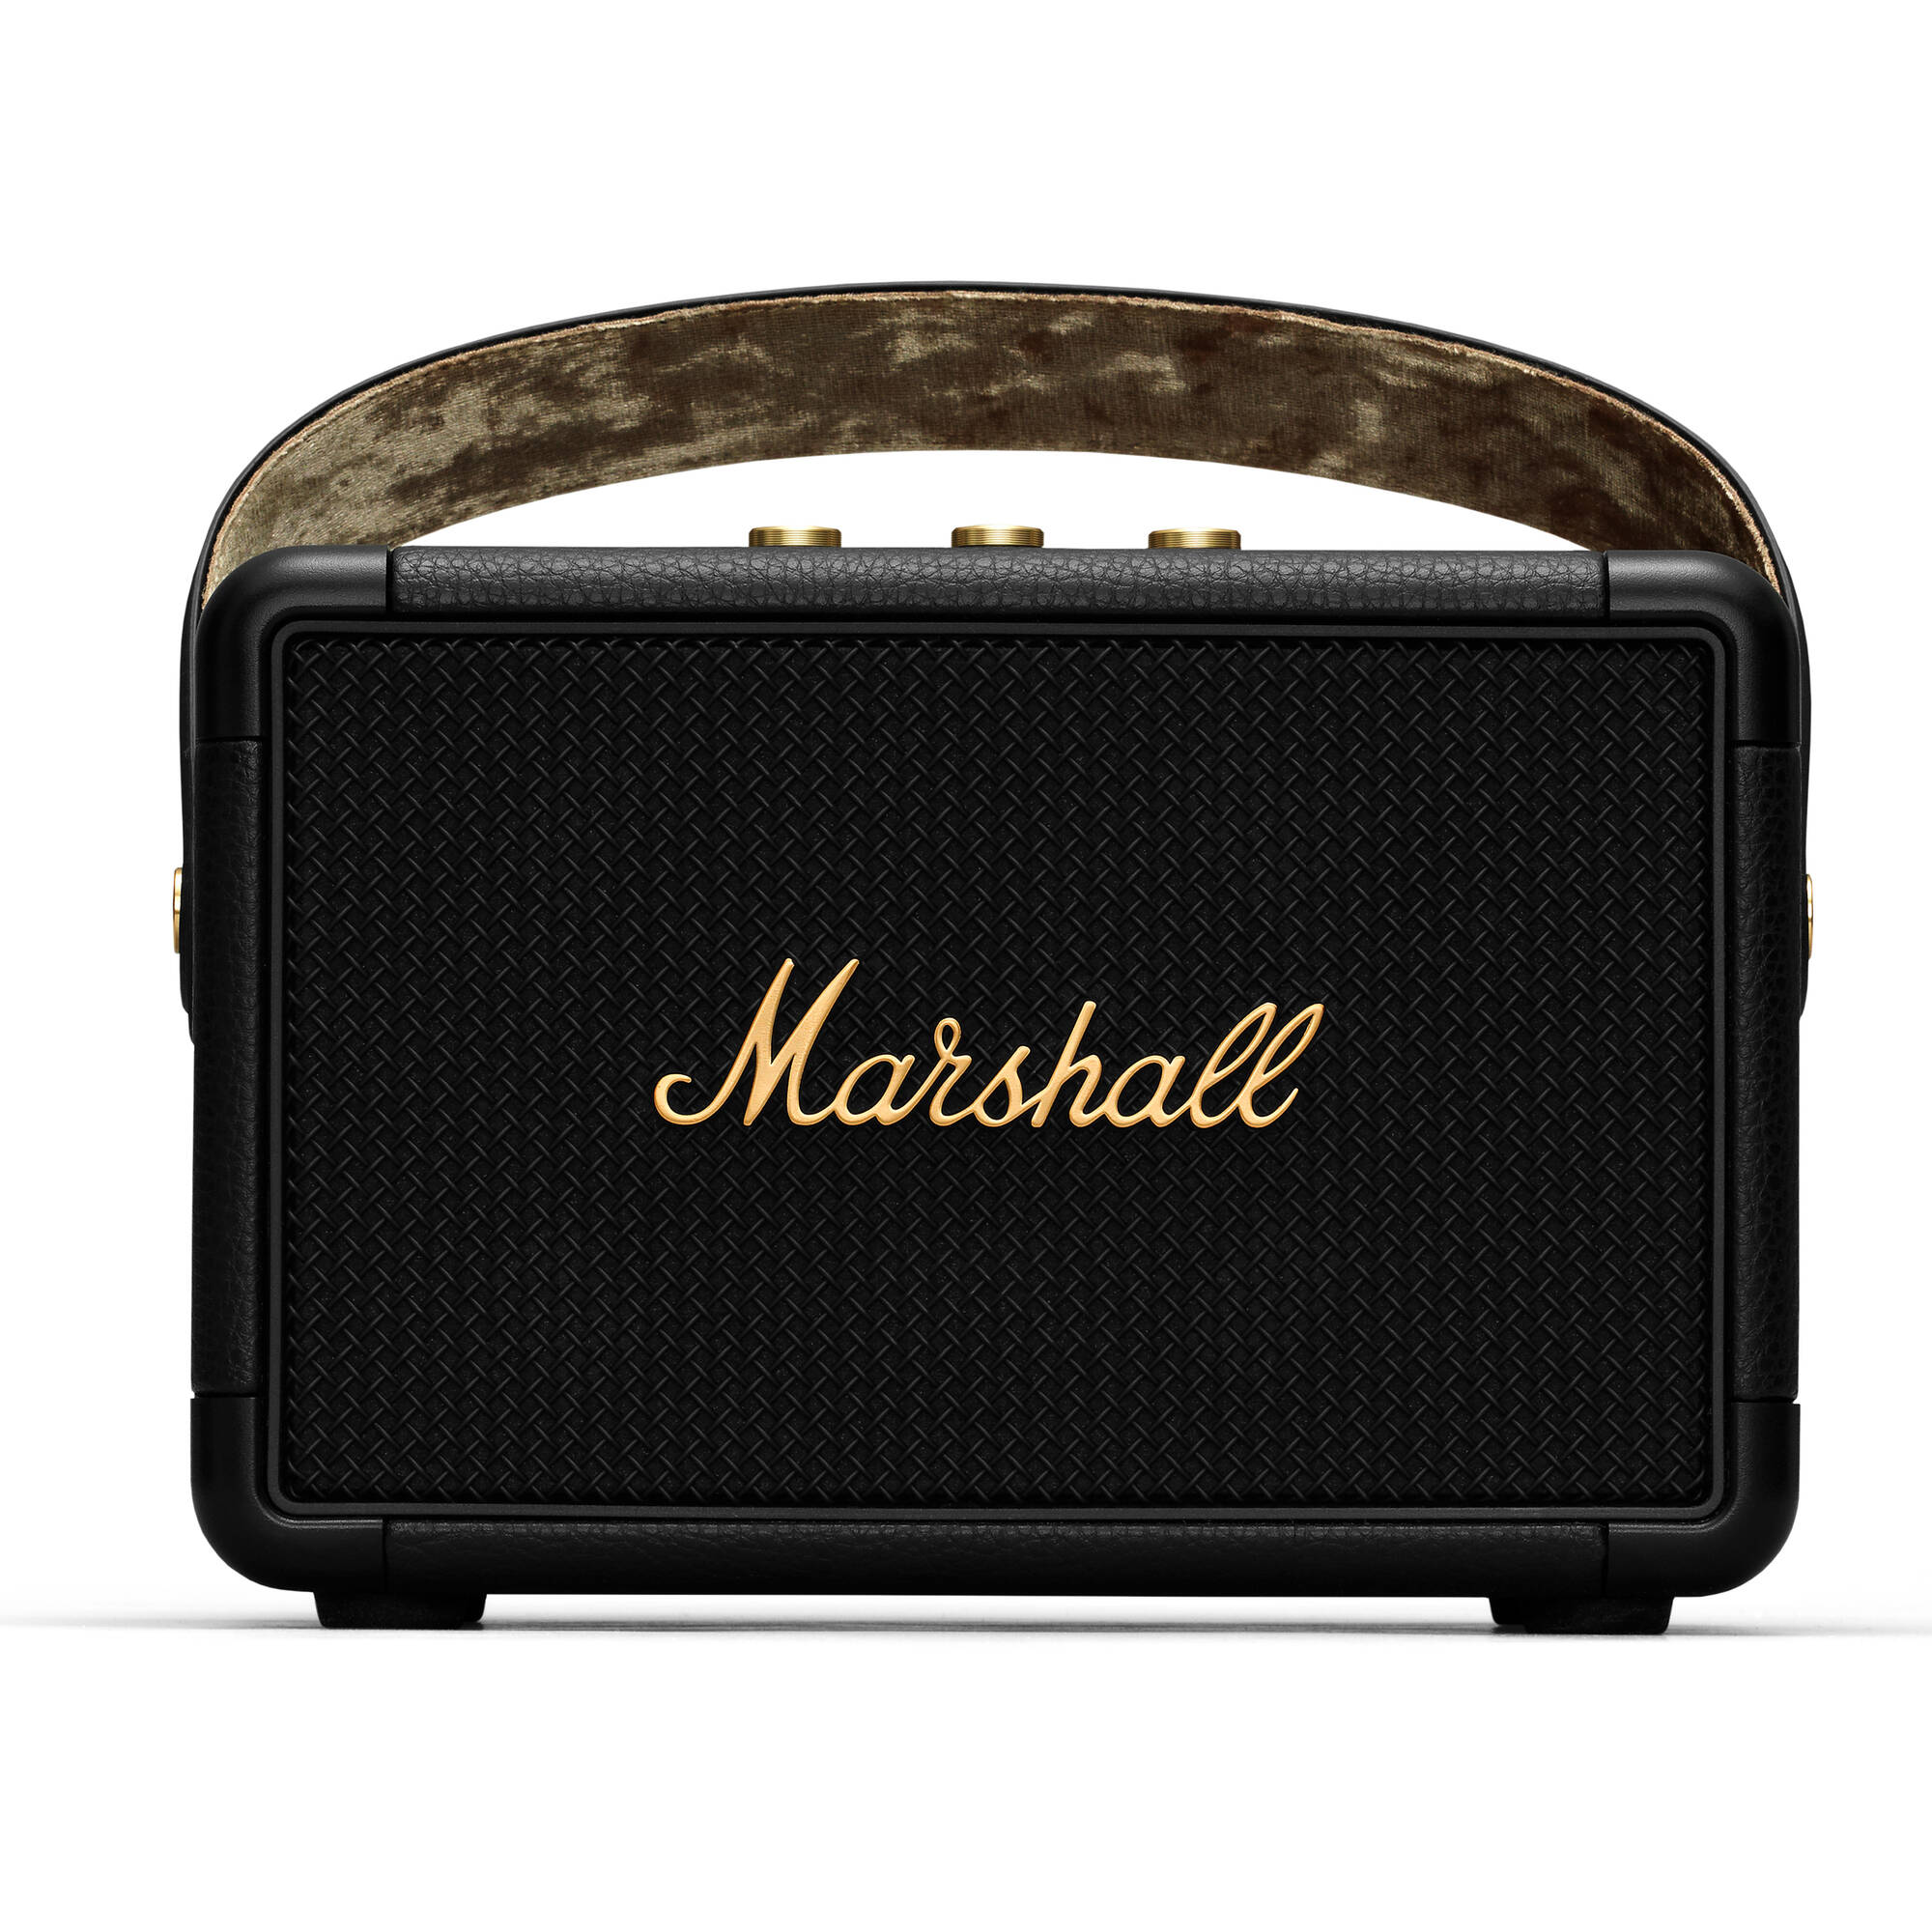  Marshall Altavoz Bluetooth portátil Middleton, negro y